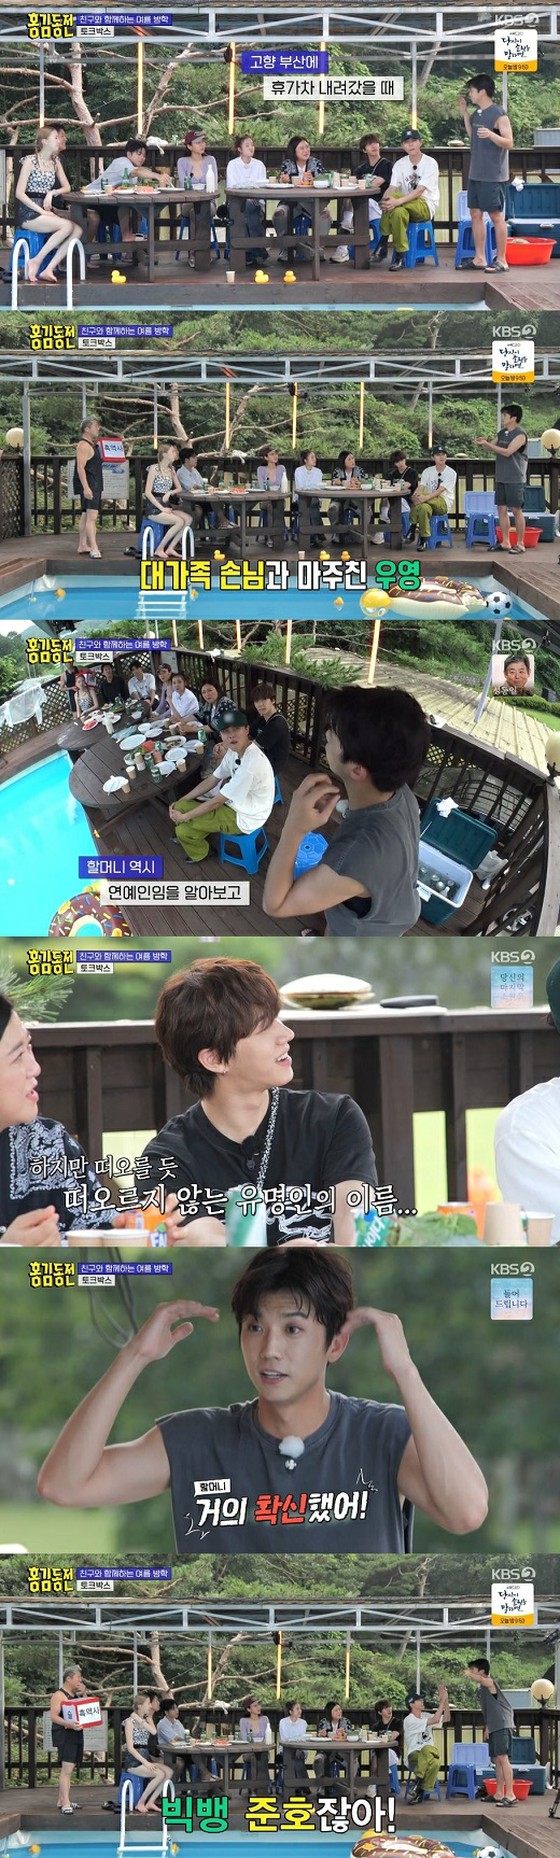 Wooyong (2PM) แนะนำประวัติศาสตร์อันมืดมิดของการเป็นสมาชิก "JUNHO" ของ "BIGBANG"